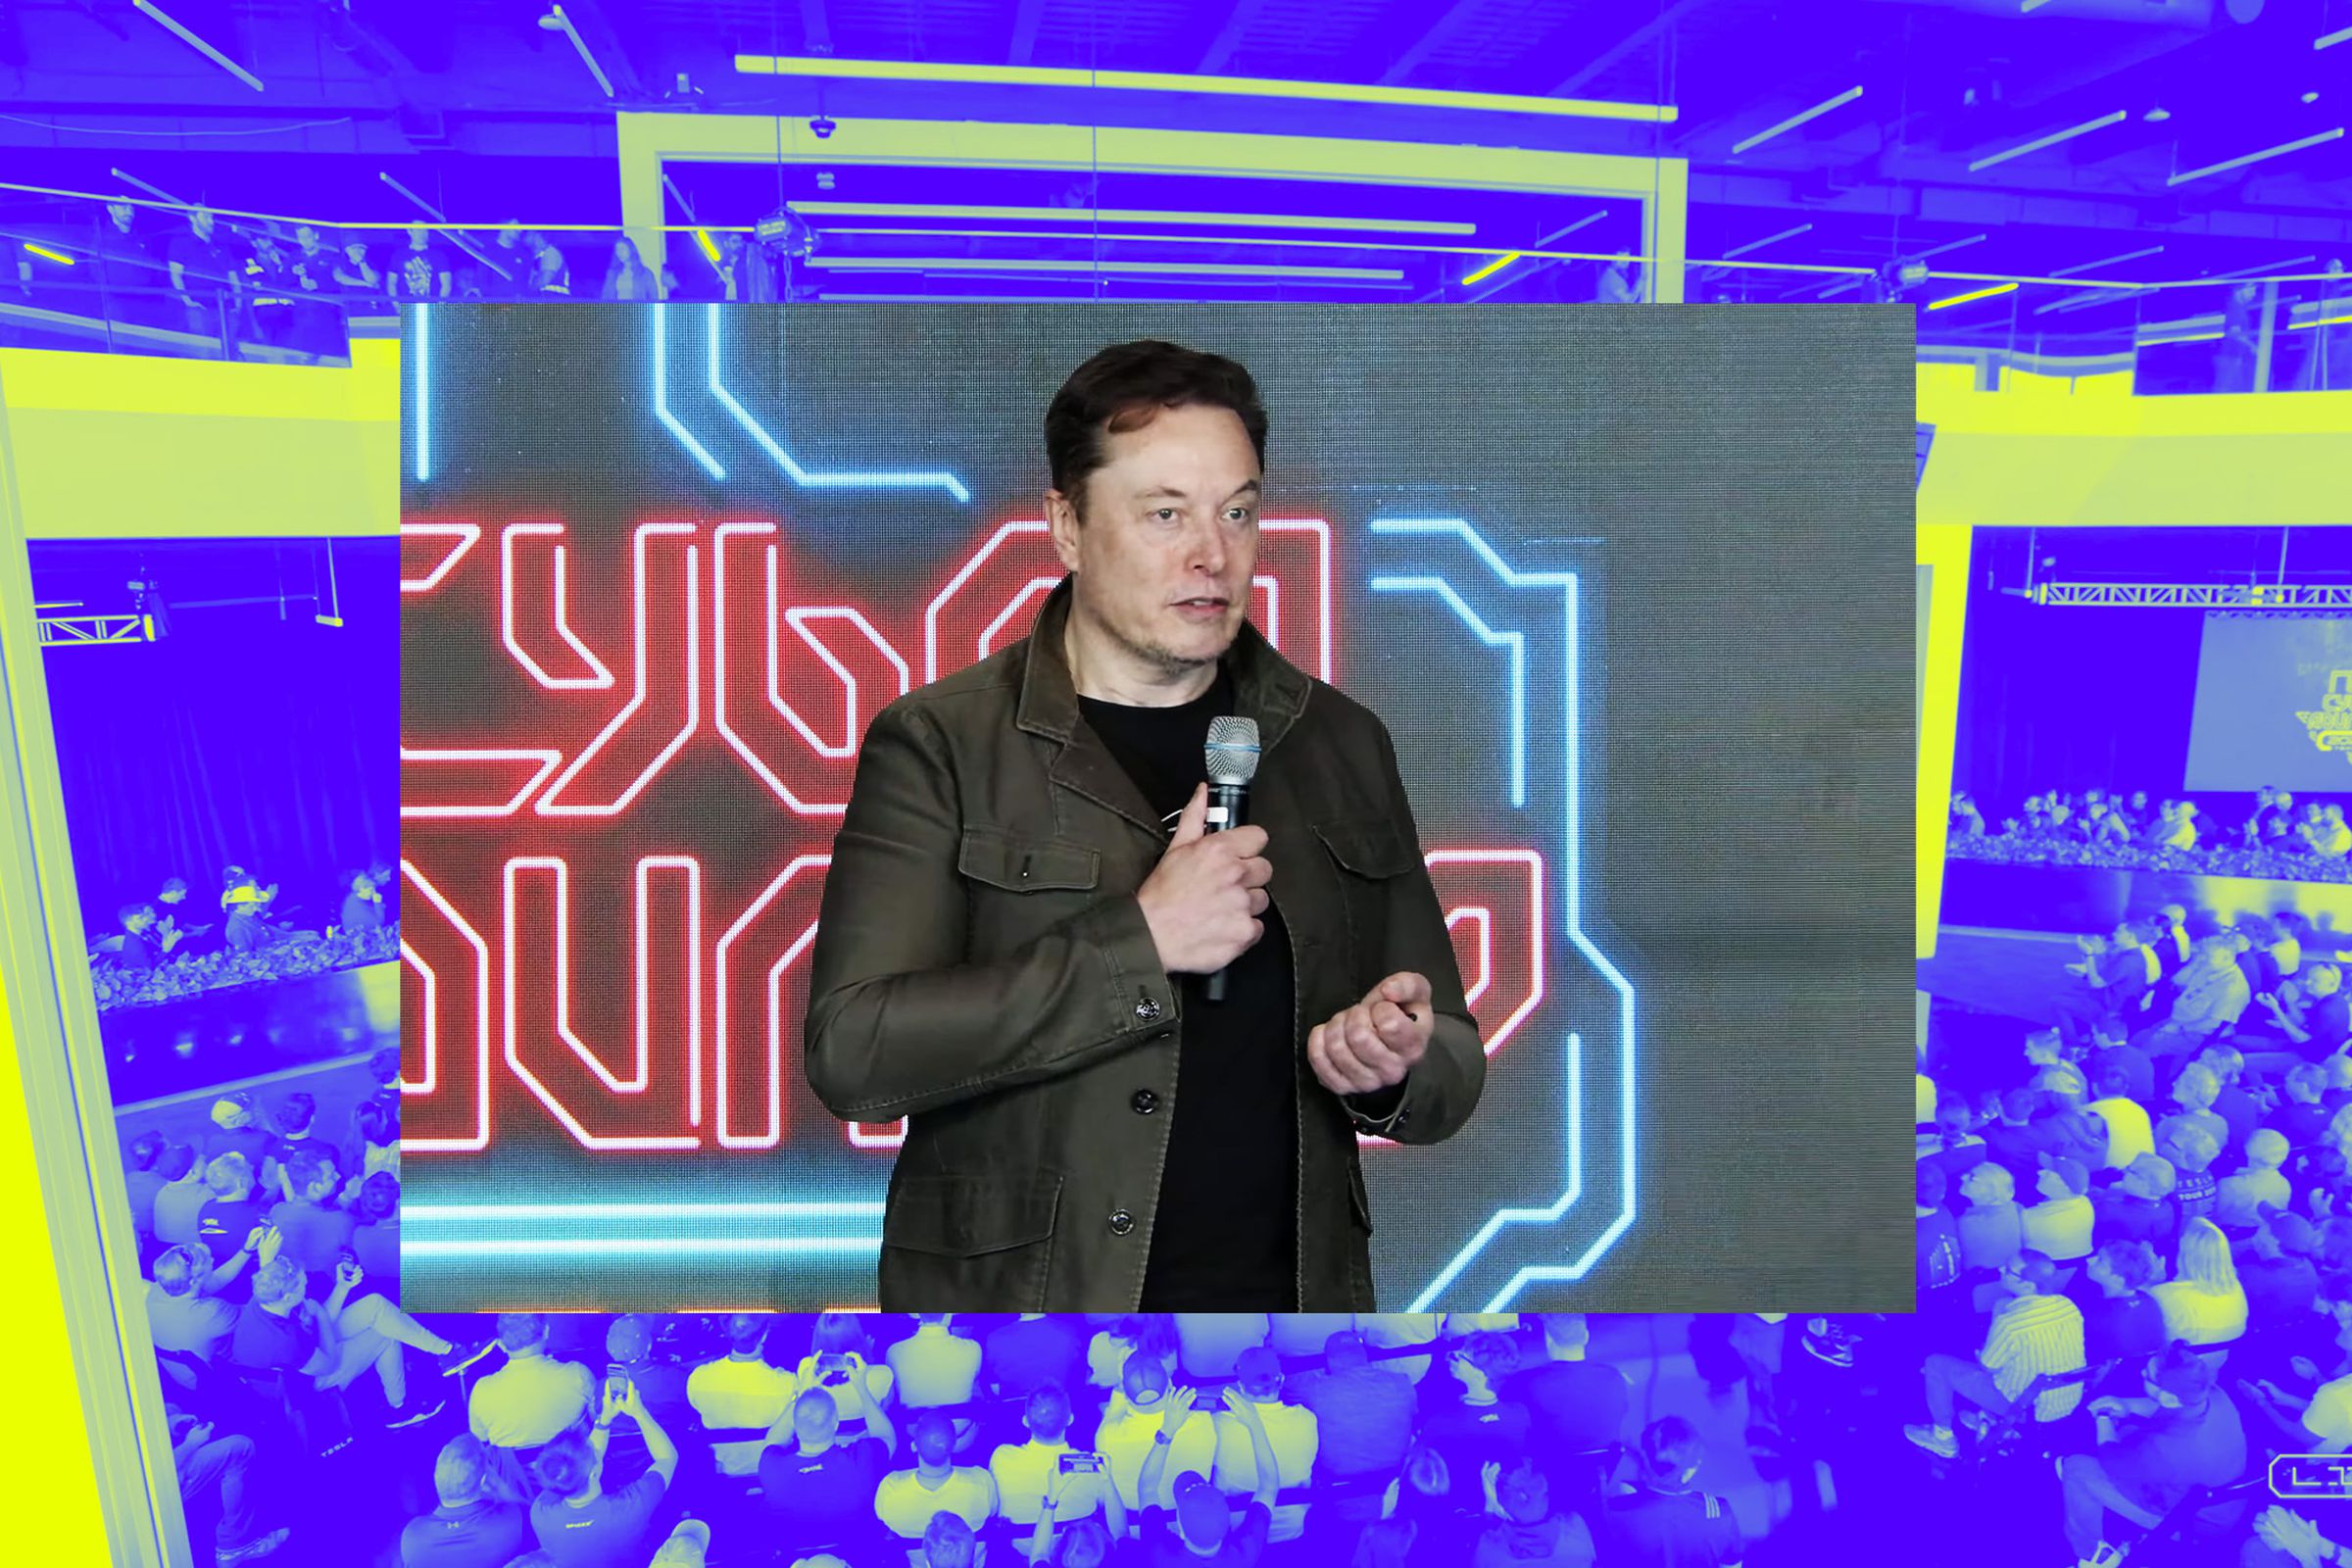 A photo of Elon Musk over a Vergecast illustration.